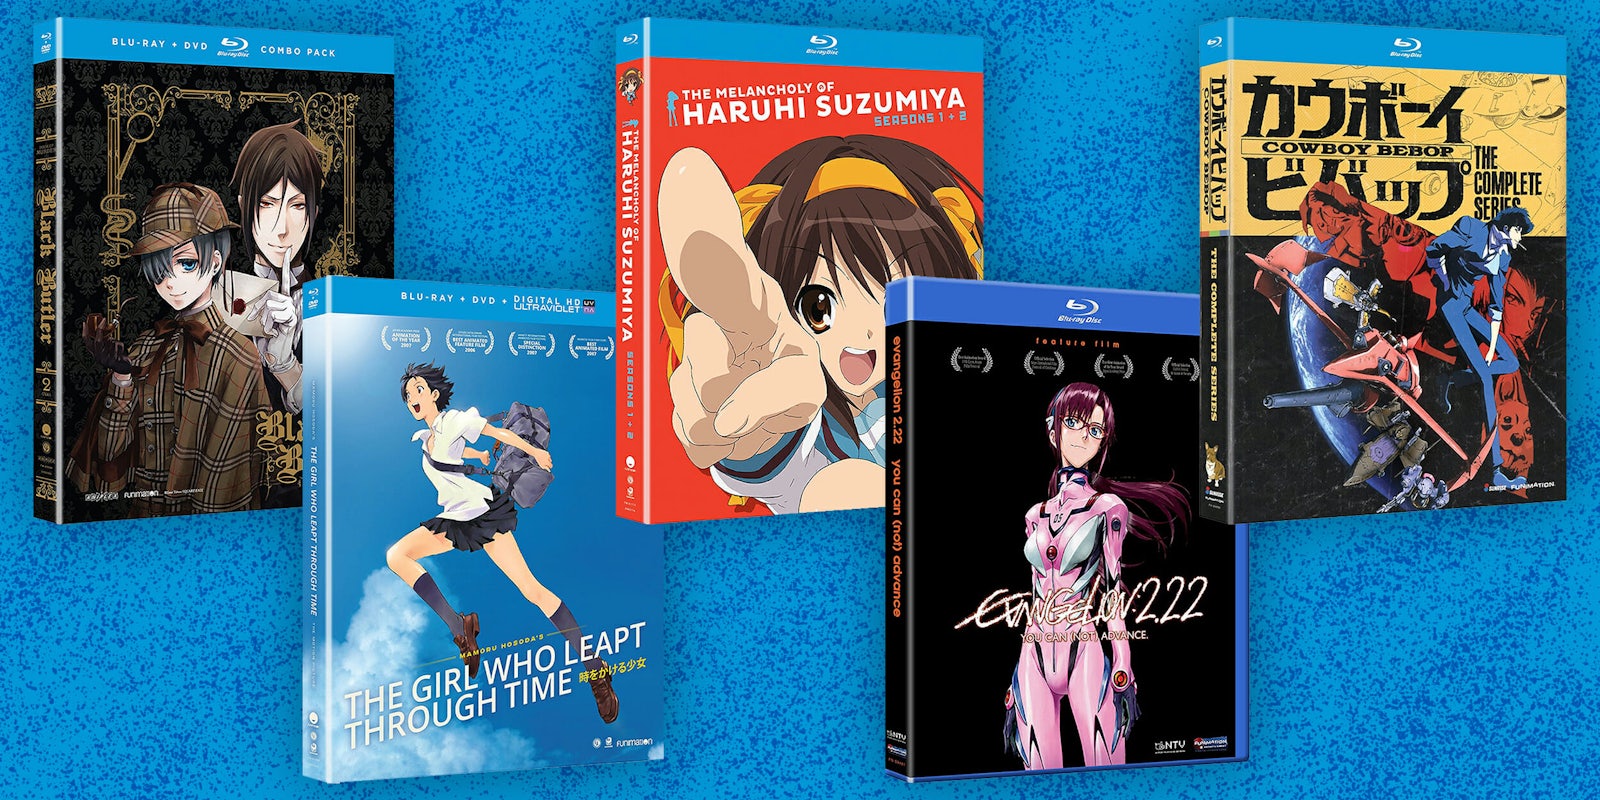 Anime DVD covers